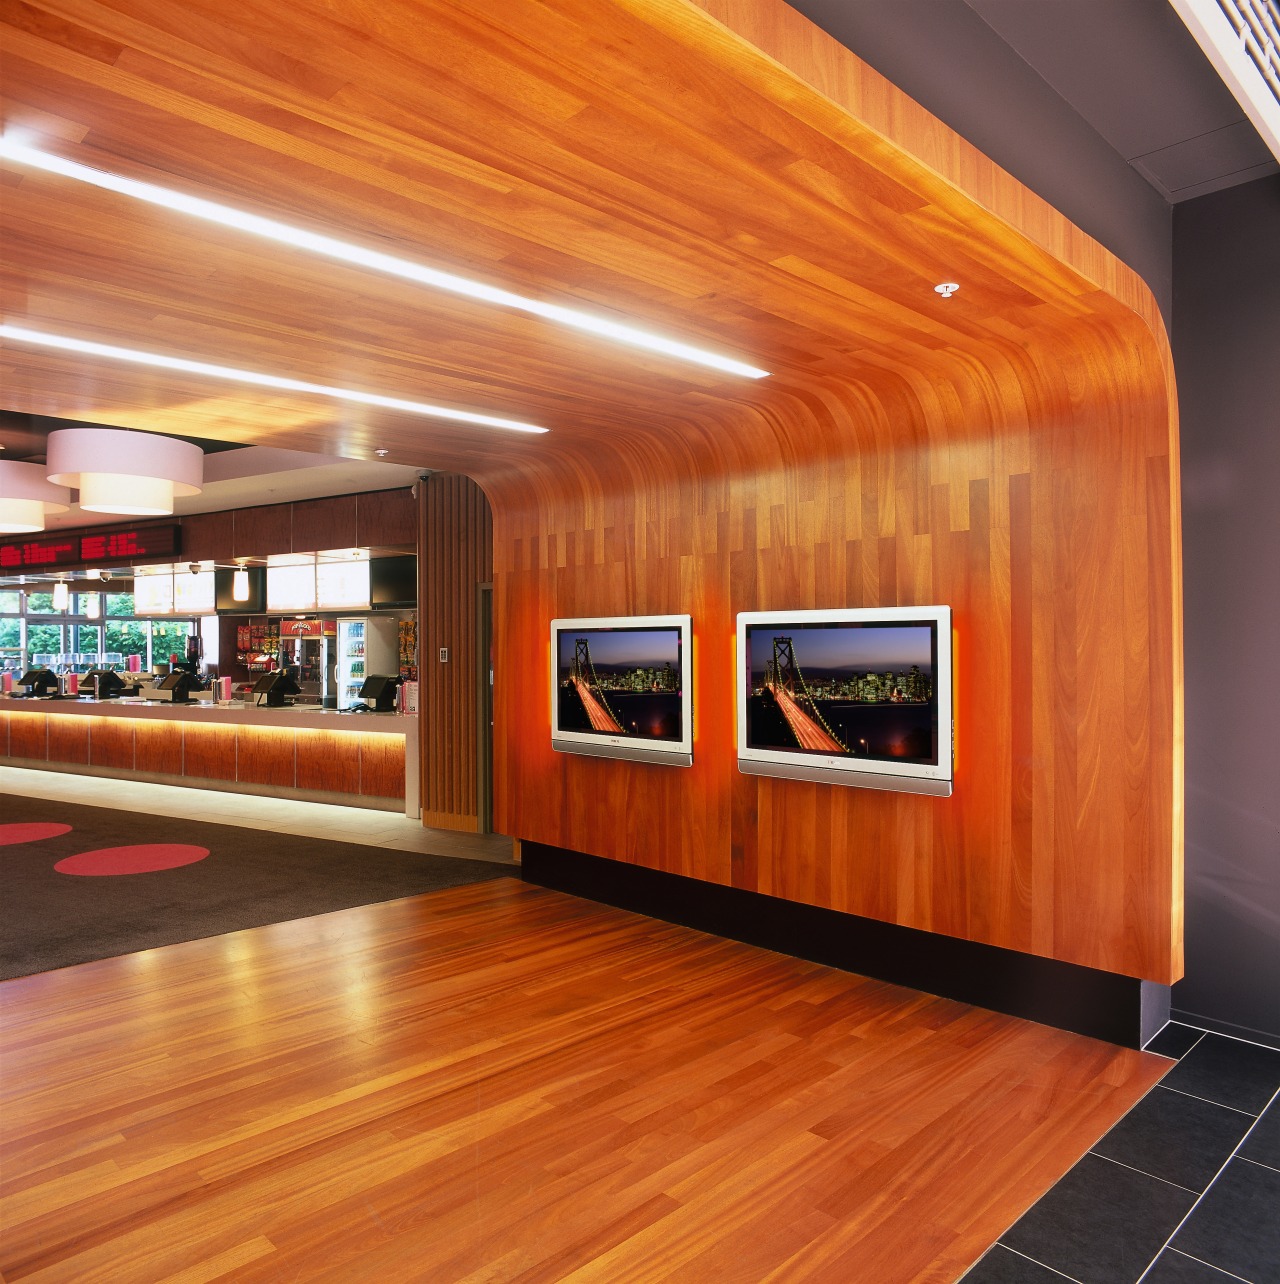 Two plasma tv screens mounted on timber wall architecture, ceiling, floor, flooring, hardwood, interior design, lobby, wall, wood, wood flooring, brown, orange